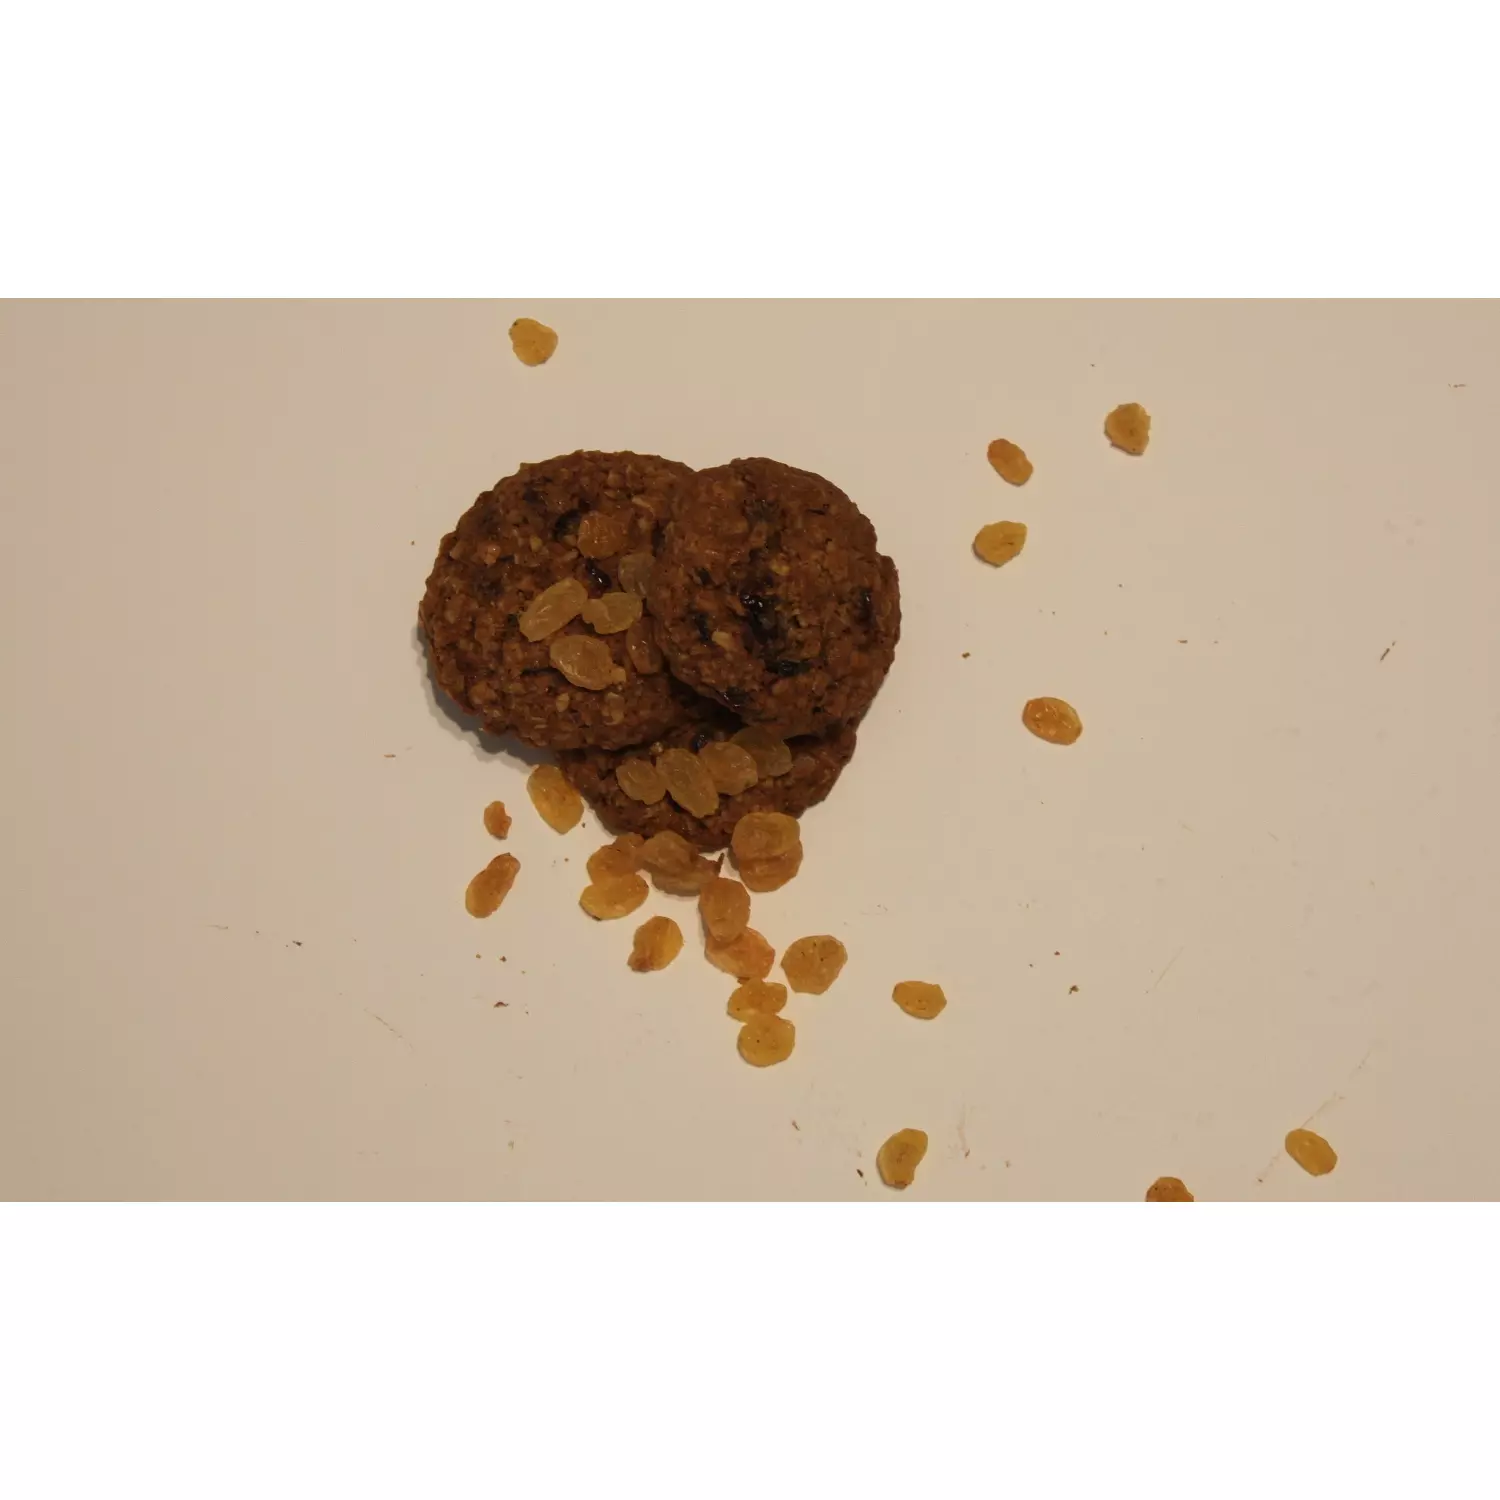 OatmeaL Raisin Cookies 0